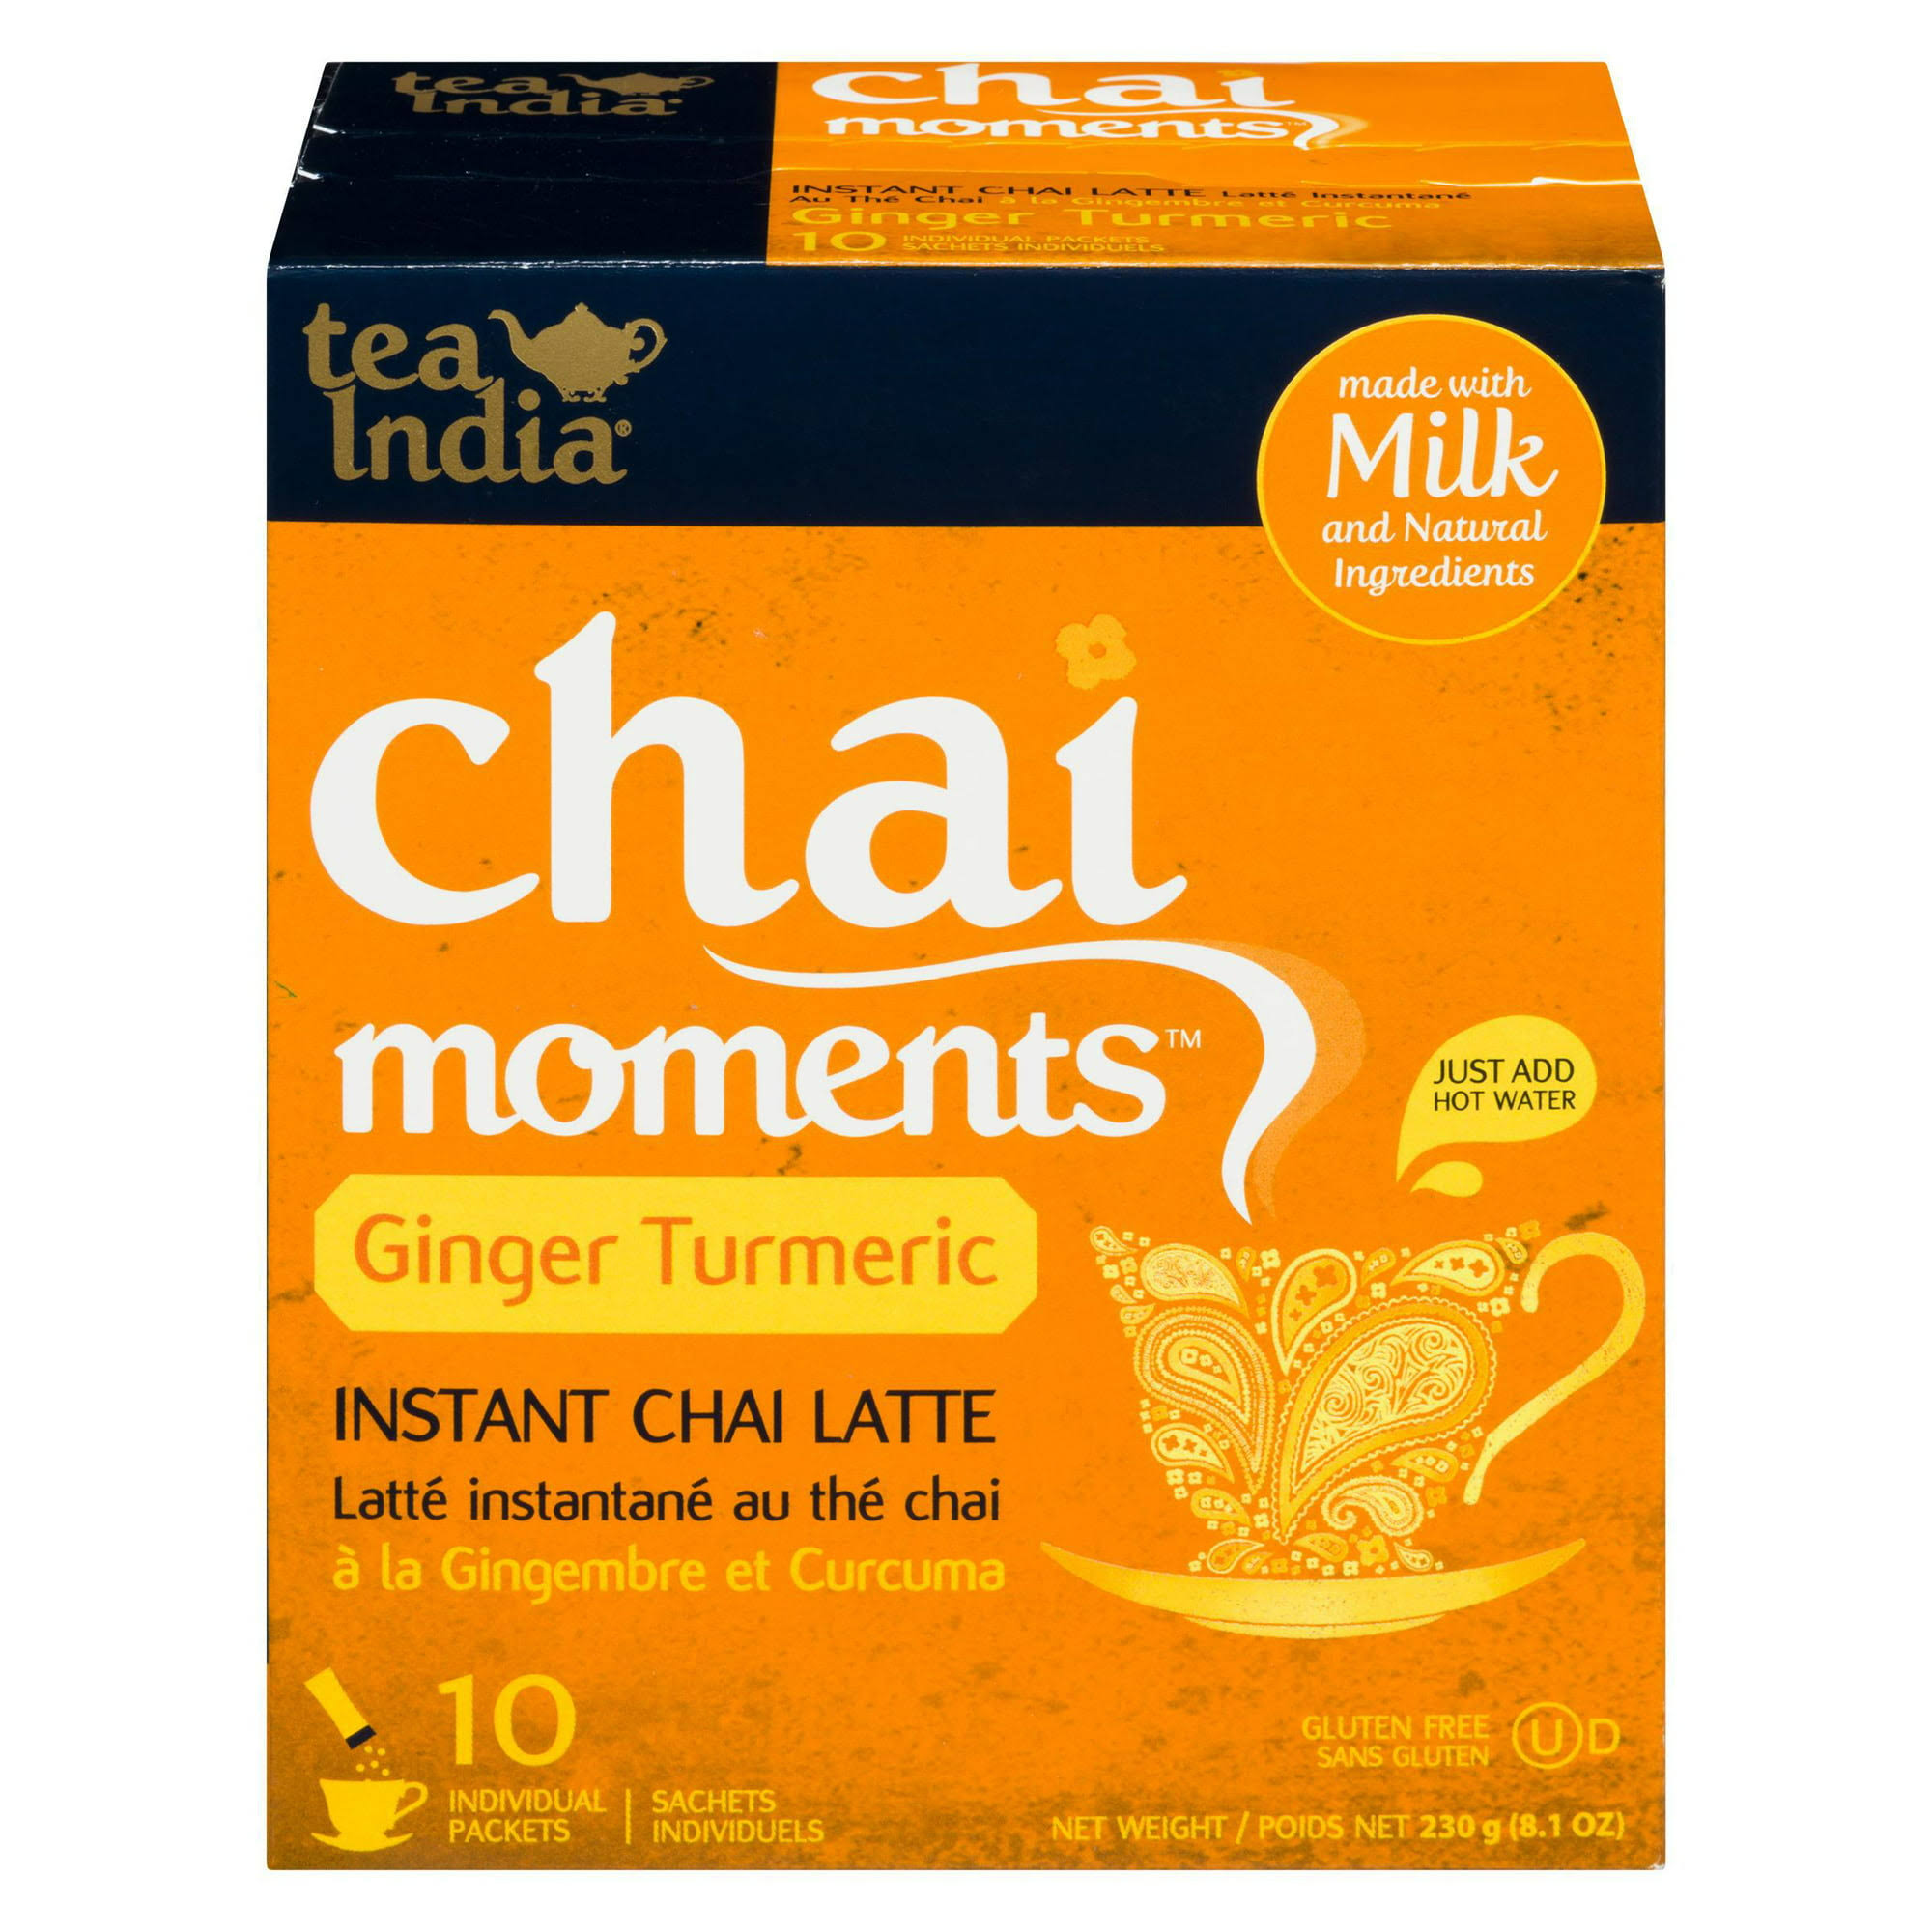 Tea India Ginger & Turmeric Chai Moments Tea - 10 ct